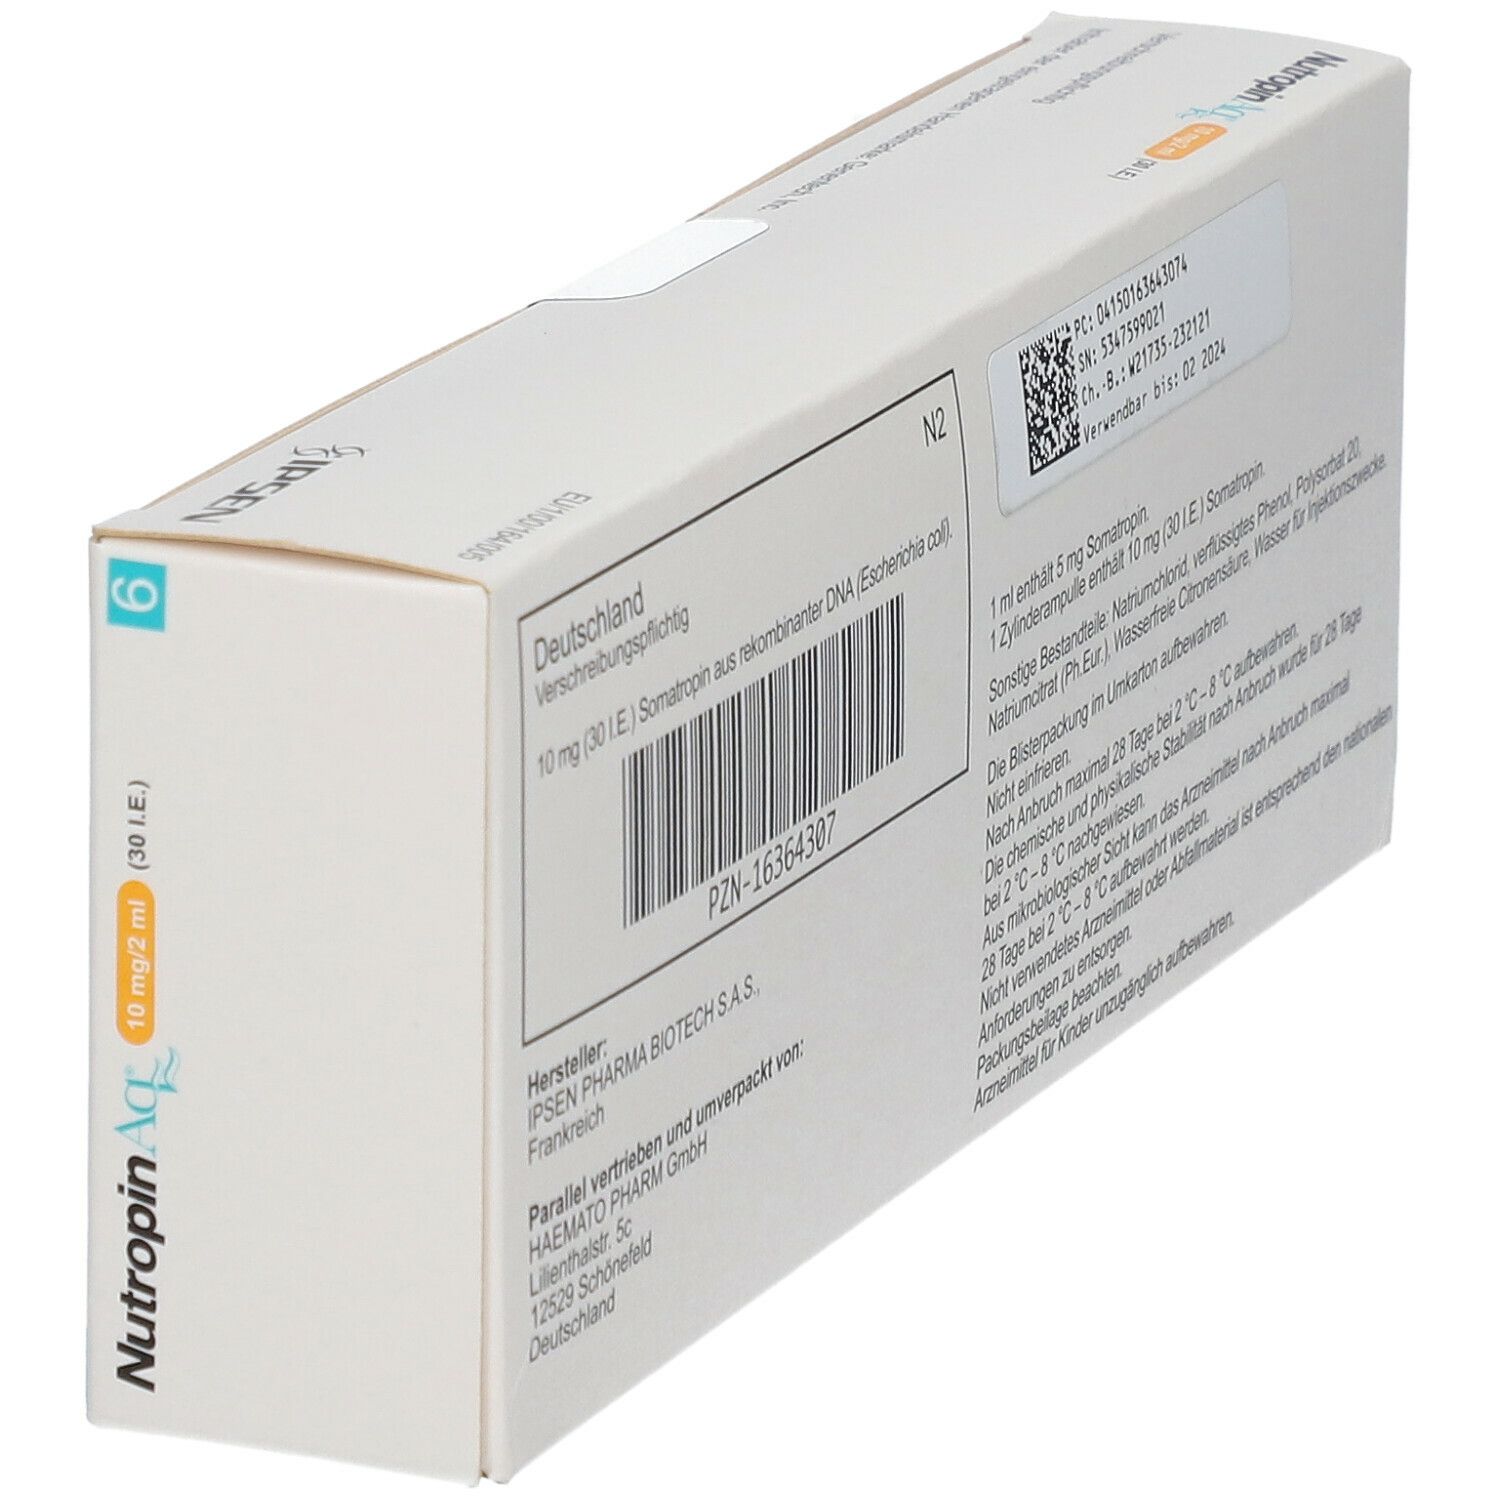 NUTROPINAQ 10 mg/2 ml 30 I.E. Injektionslösung